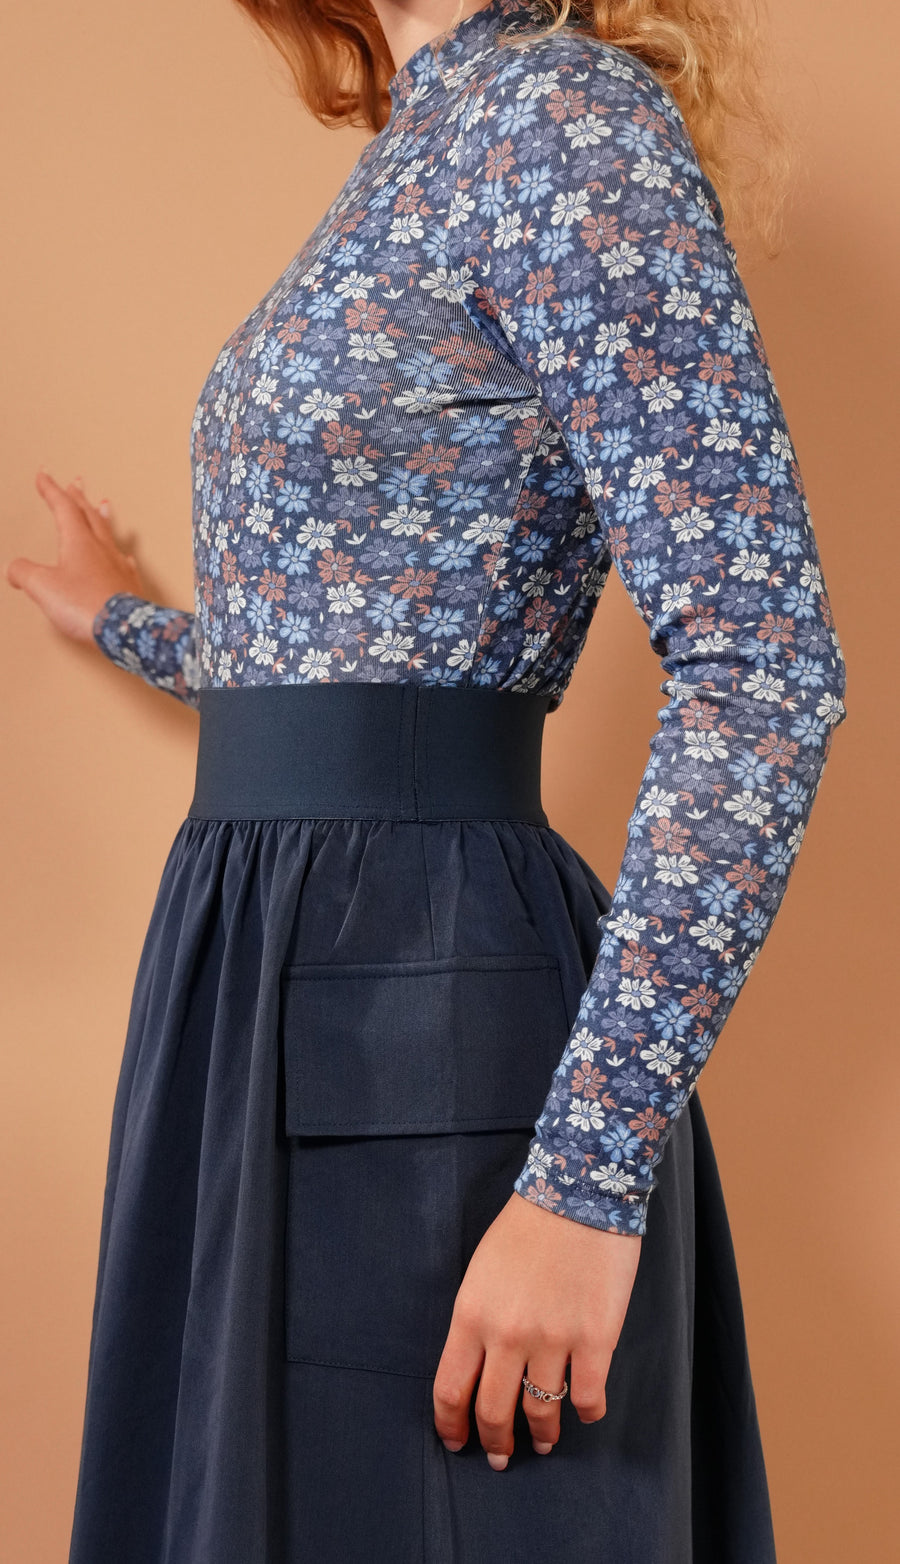 Side pockets blue midi skirt by Luna Mae